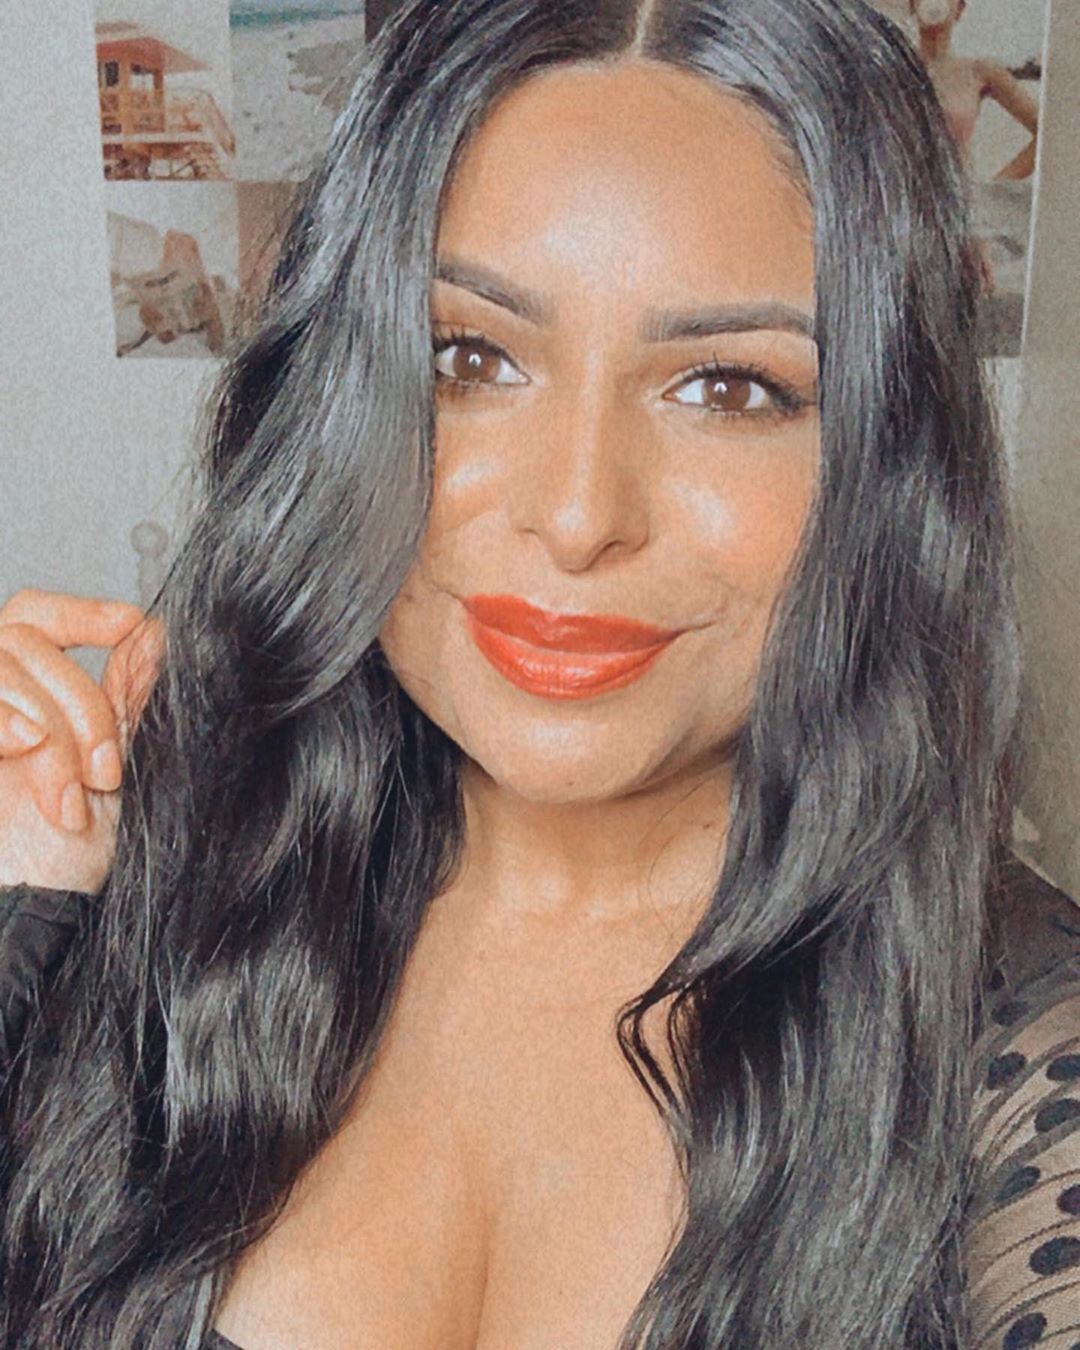 SexyHair® - 𝙎𝙩𝙮𝙡𝙞𝙨𝙩 𝙎𝙥𝙤𝙩𝙡𝙞𝙜𝙝𝙩: Gabriela Gutierrez⁣
via @voyagelamag ⁣
𝙒𝙚’𝙙 𝙡𝙤𝙫𝙚 𝙩𝙤 𝙝𝙚𝙖𝙧 𝙢𝙤𝙧𝙚 𝙖𝙗𝙤𝙪𝙩 𝙮𝙤𝒖𝒓𝙗𝙪𝙨𝙞𝙣𝙚𝙨𝙨.⁣
"I am a Professional, bilingual, freelance Makeup + Hair Artist. It’s very rewarding t...